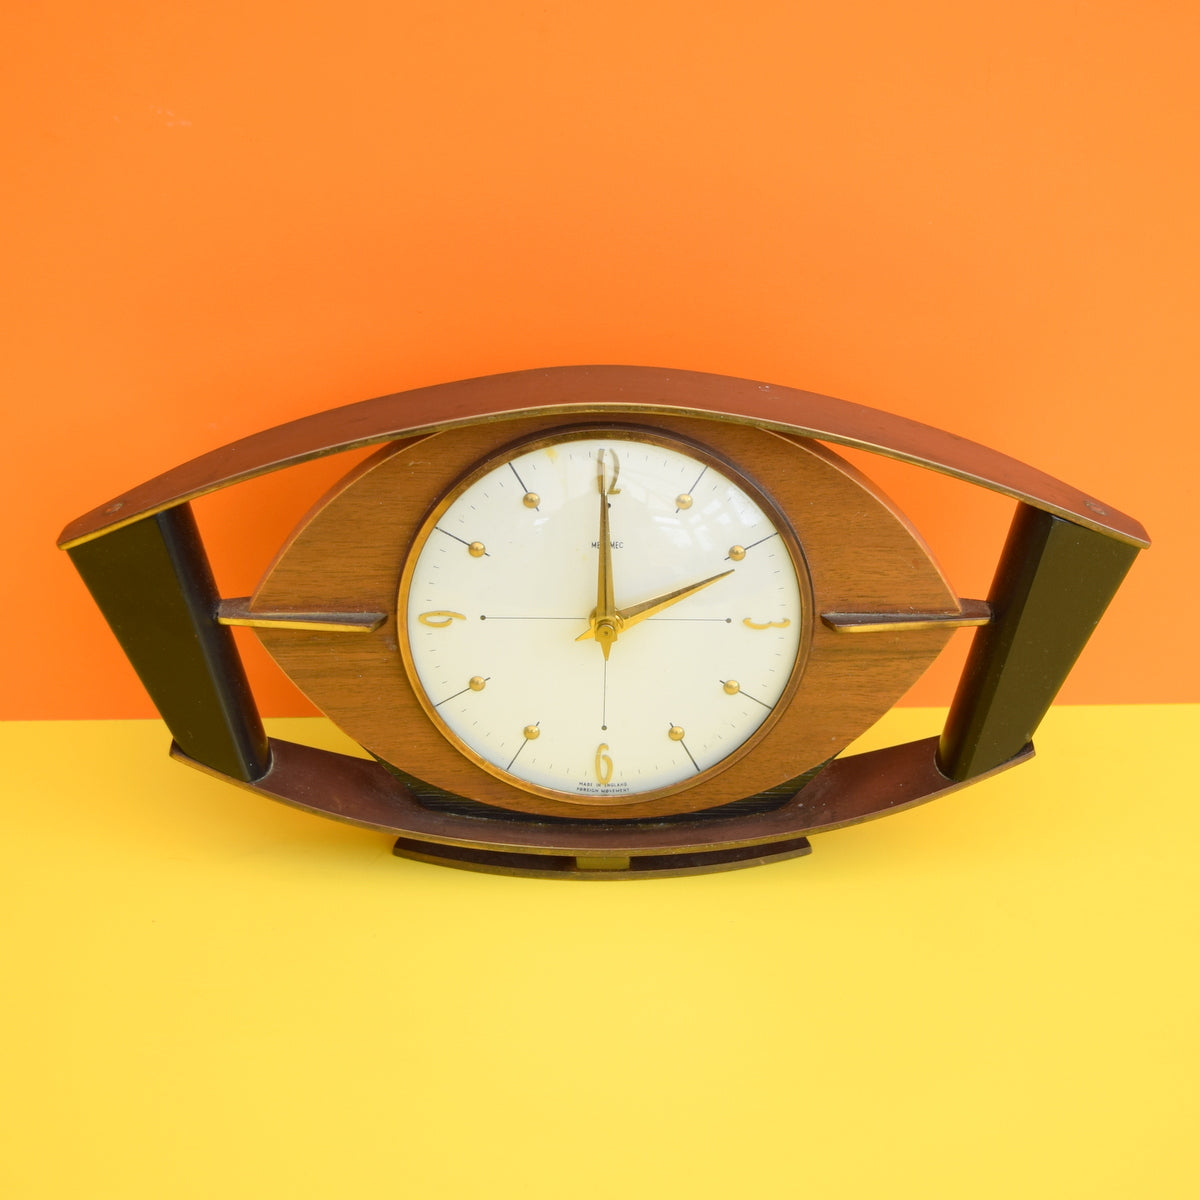 Vintage 1950s Mantel Clock - Shape Of An Eye - Metamec